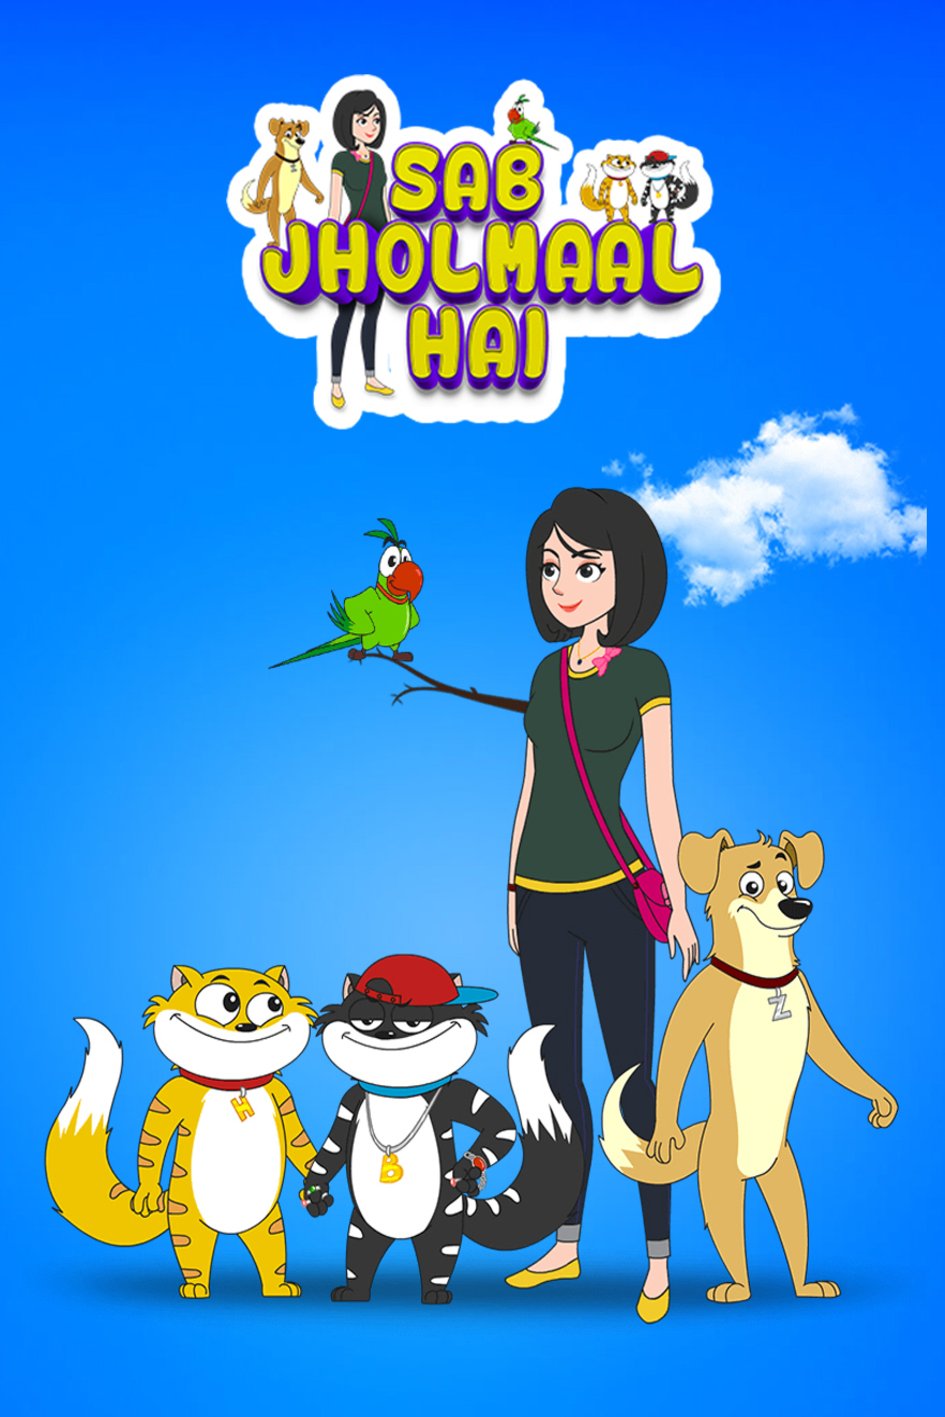 Poster of the movie Sab Jholmaal Hai